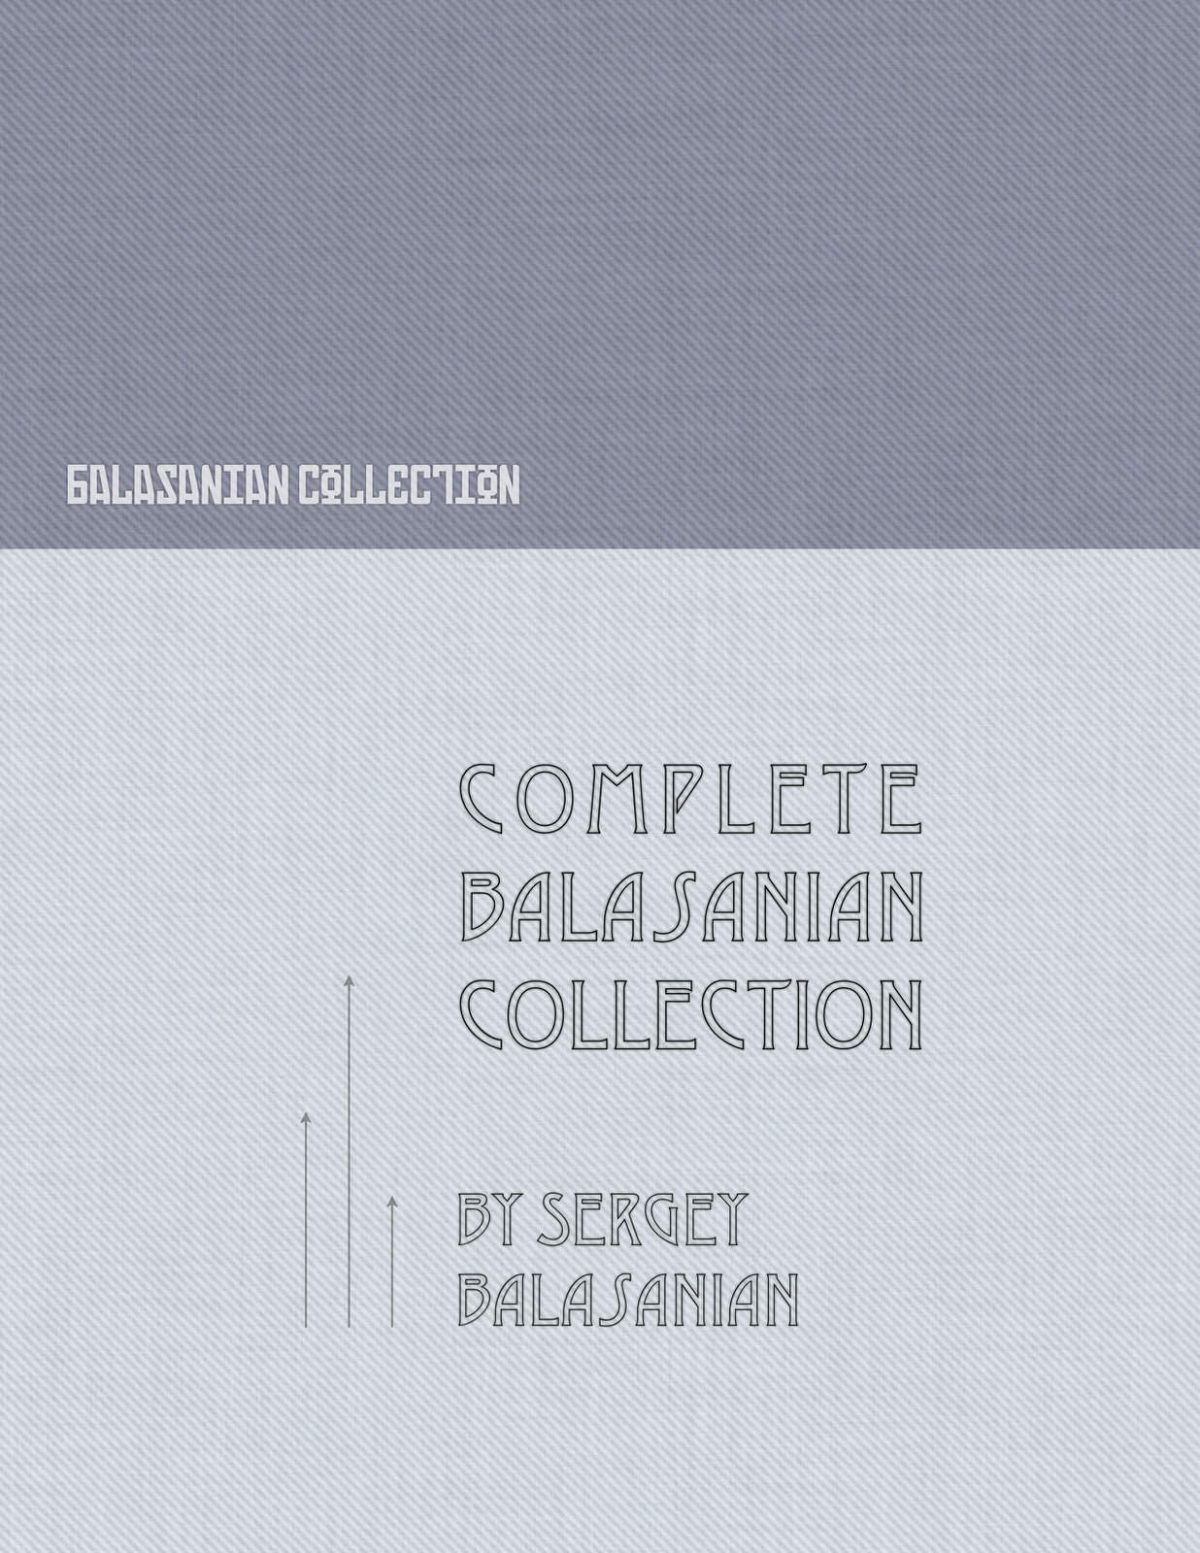 Balasanian Complete Collection